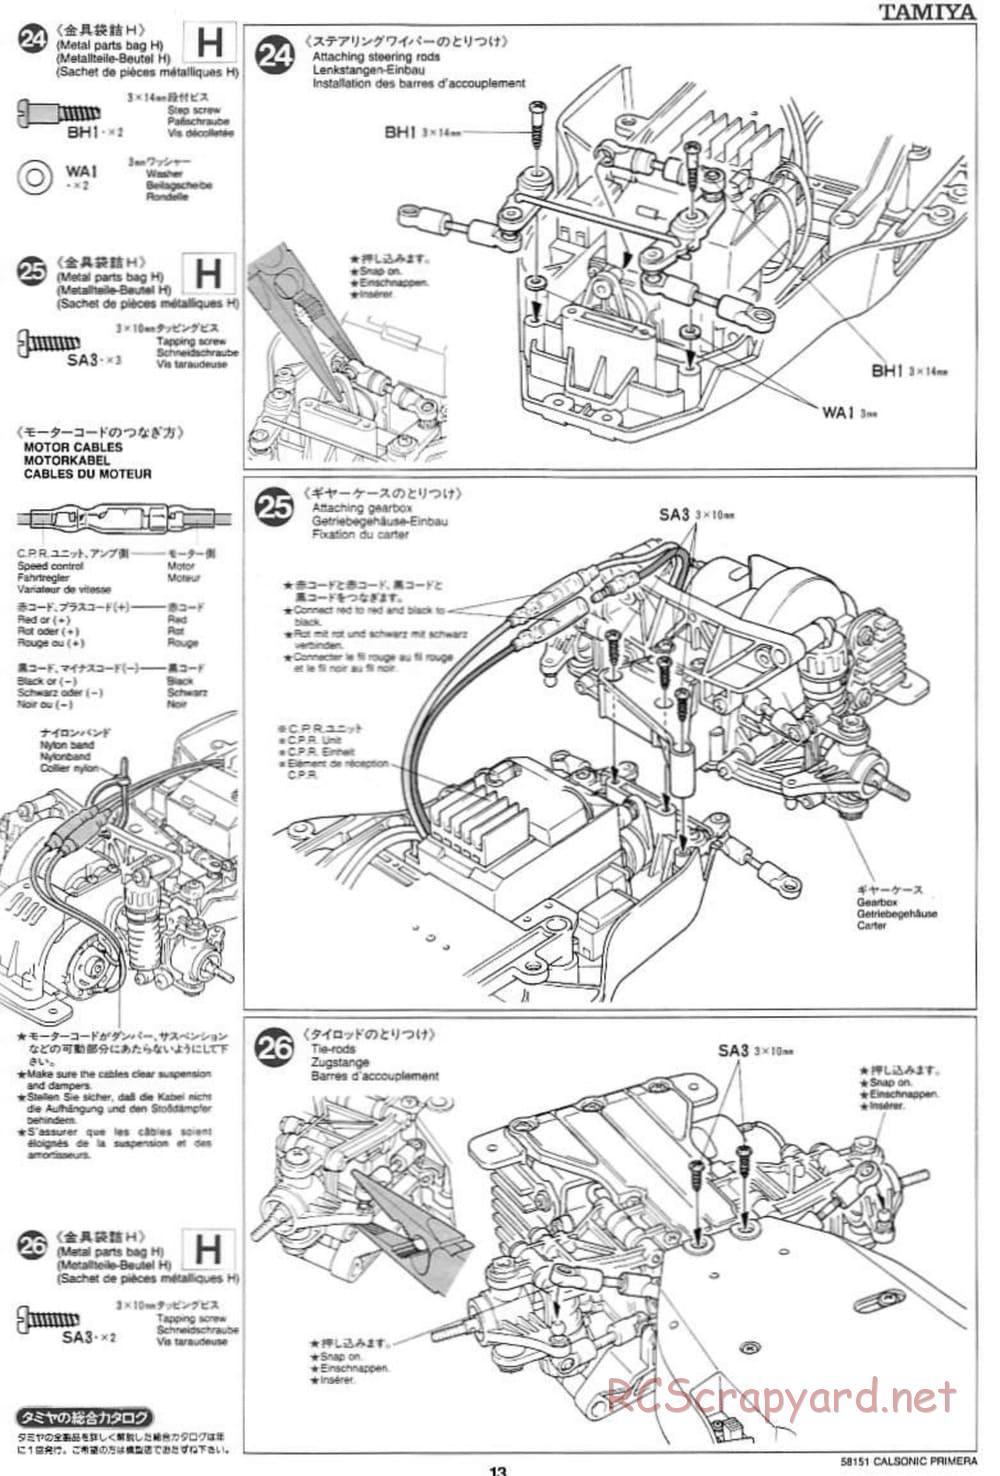 Tamiya - Calsonic Nissan Primera JTCC - FF-01 Chassis - Manual - Page 13